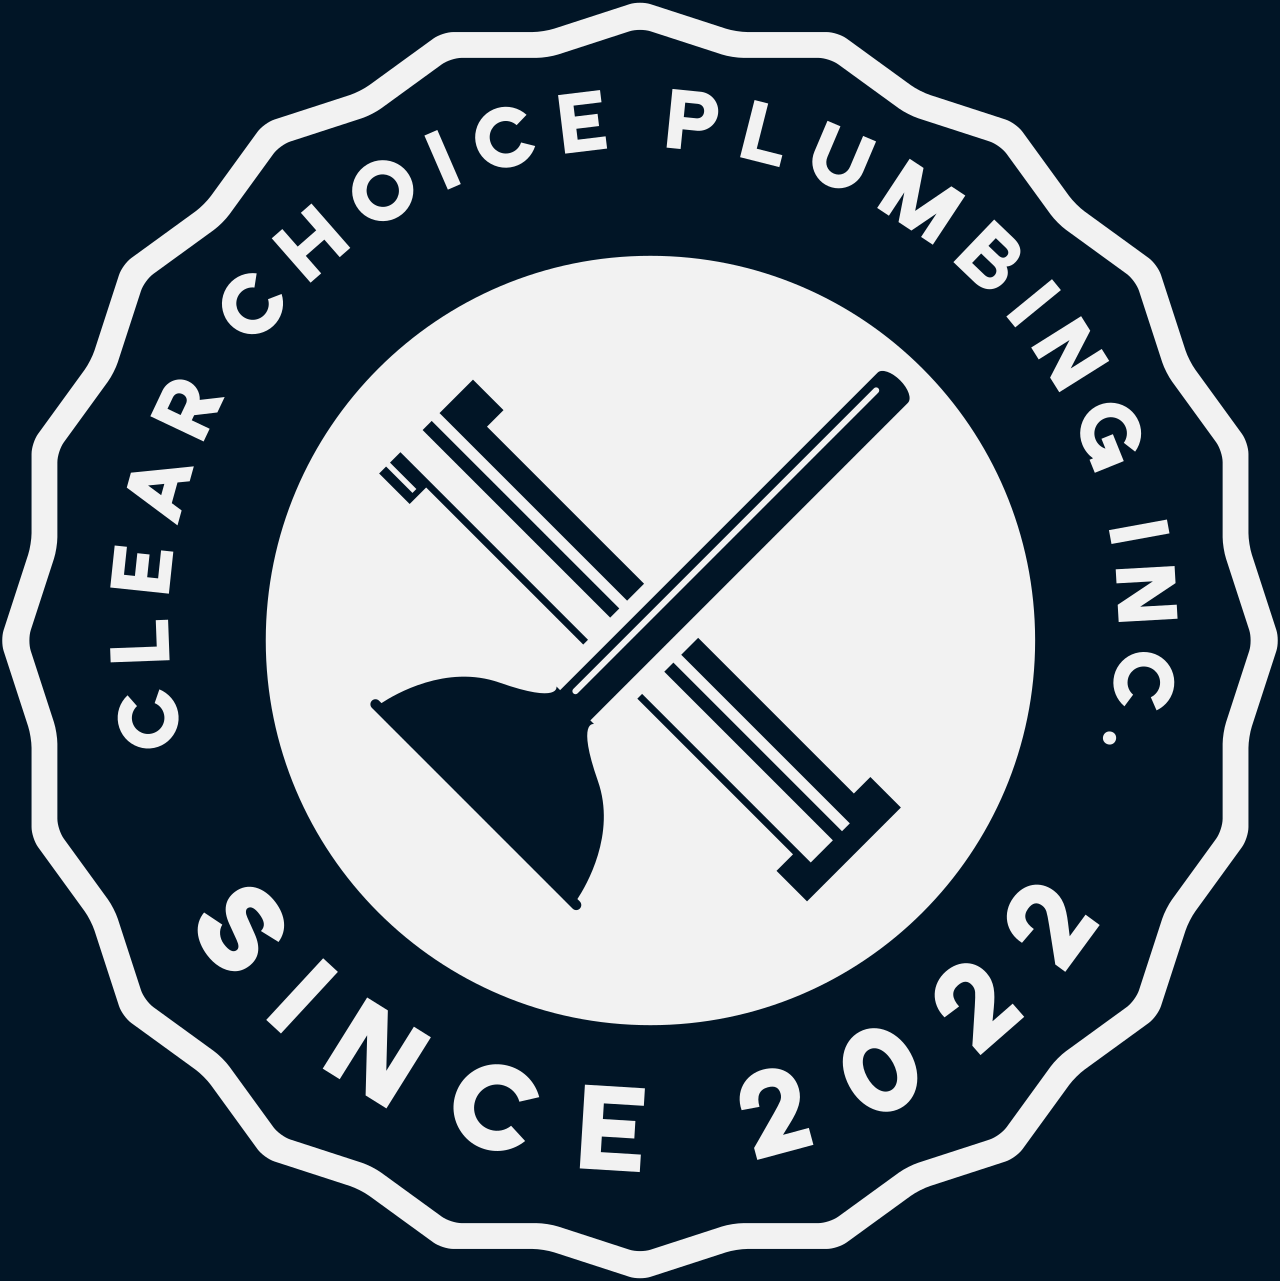 Clear Choice Plumbing Inc.'s web page